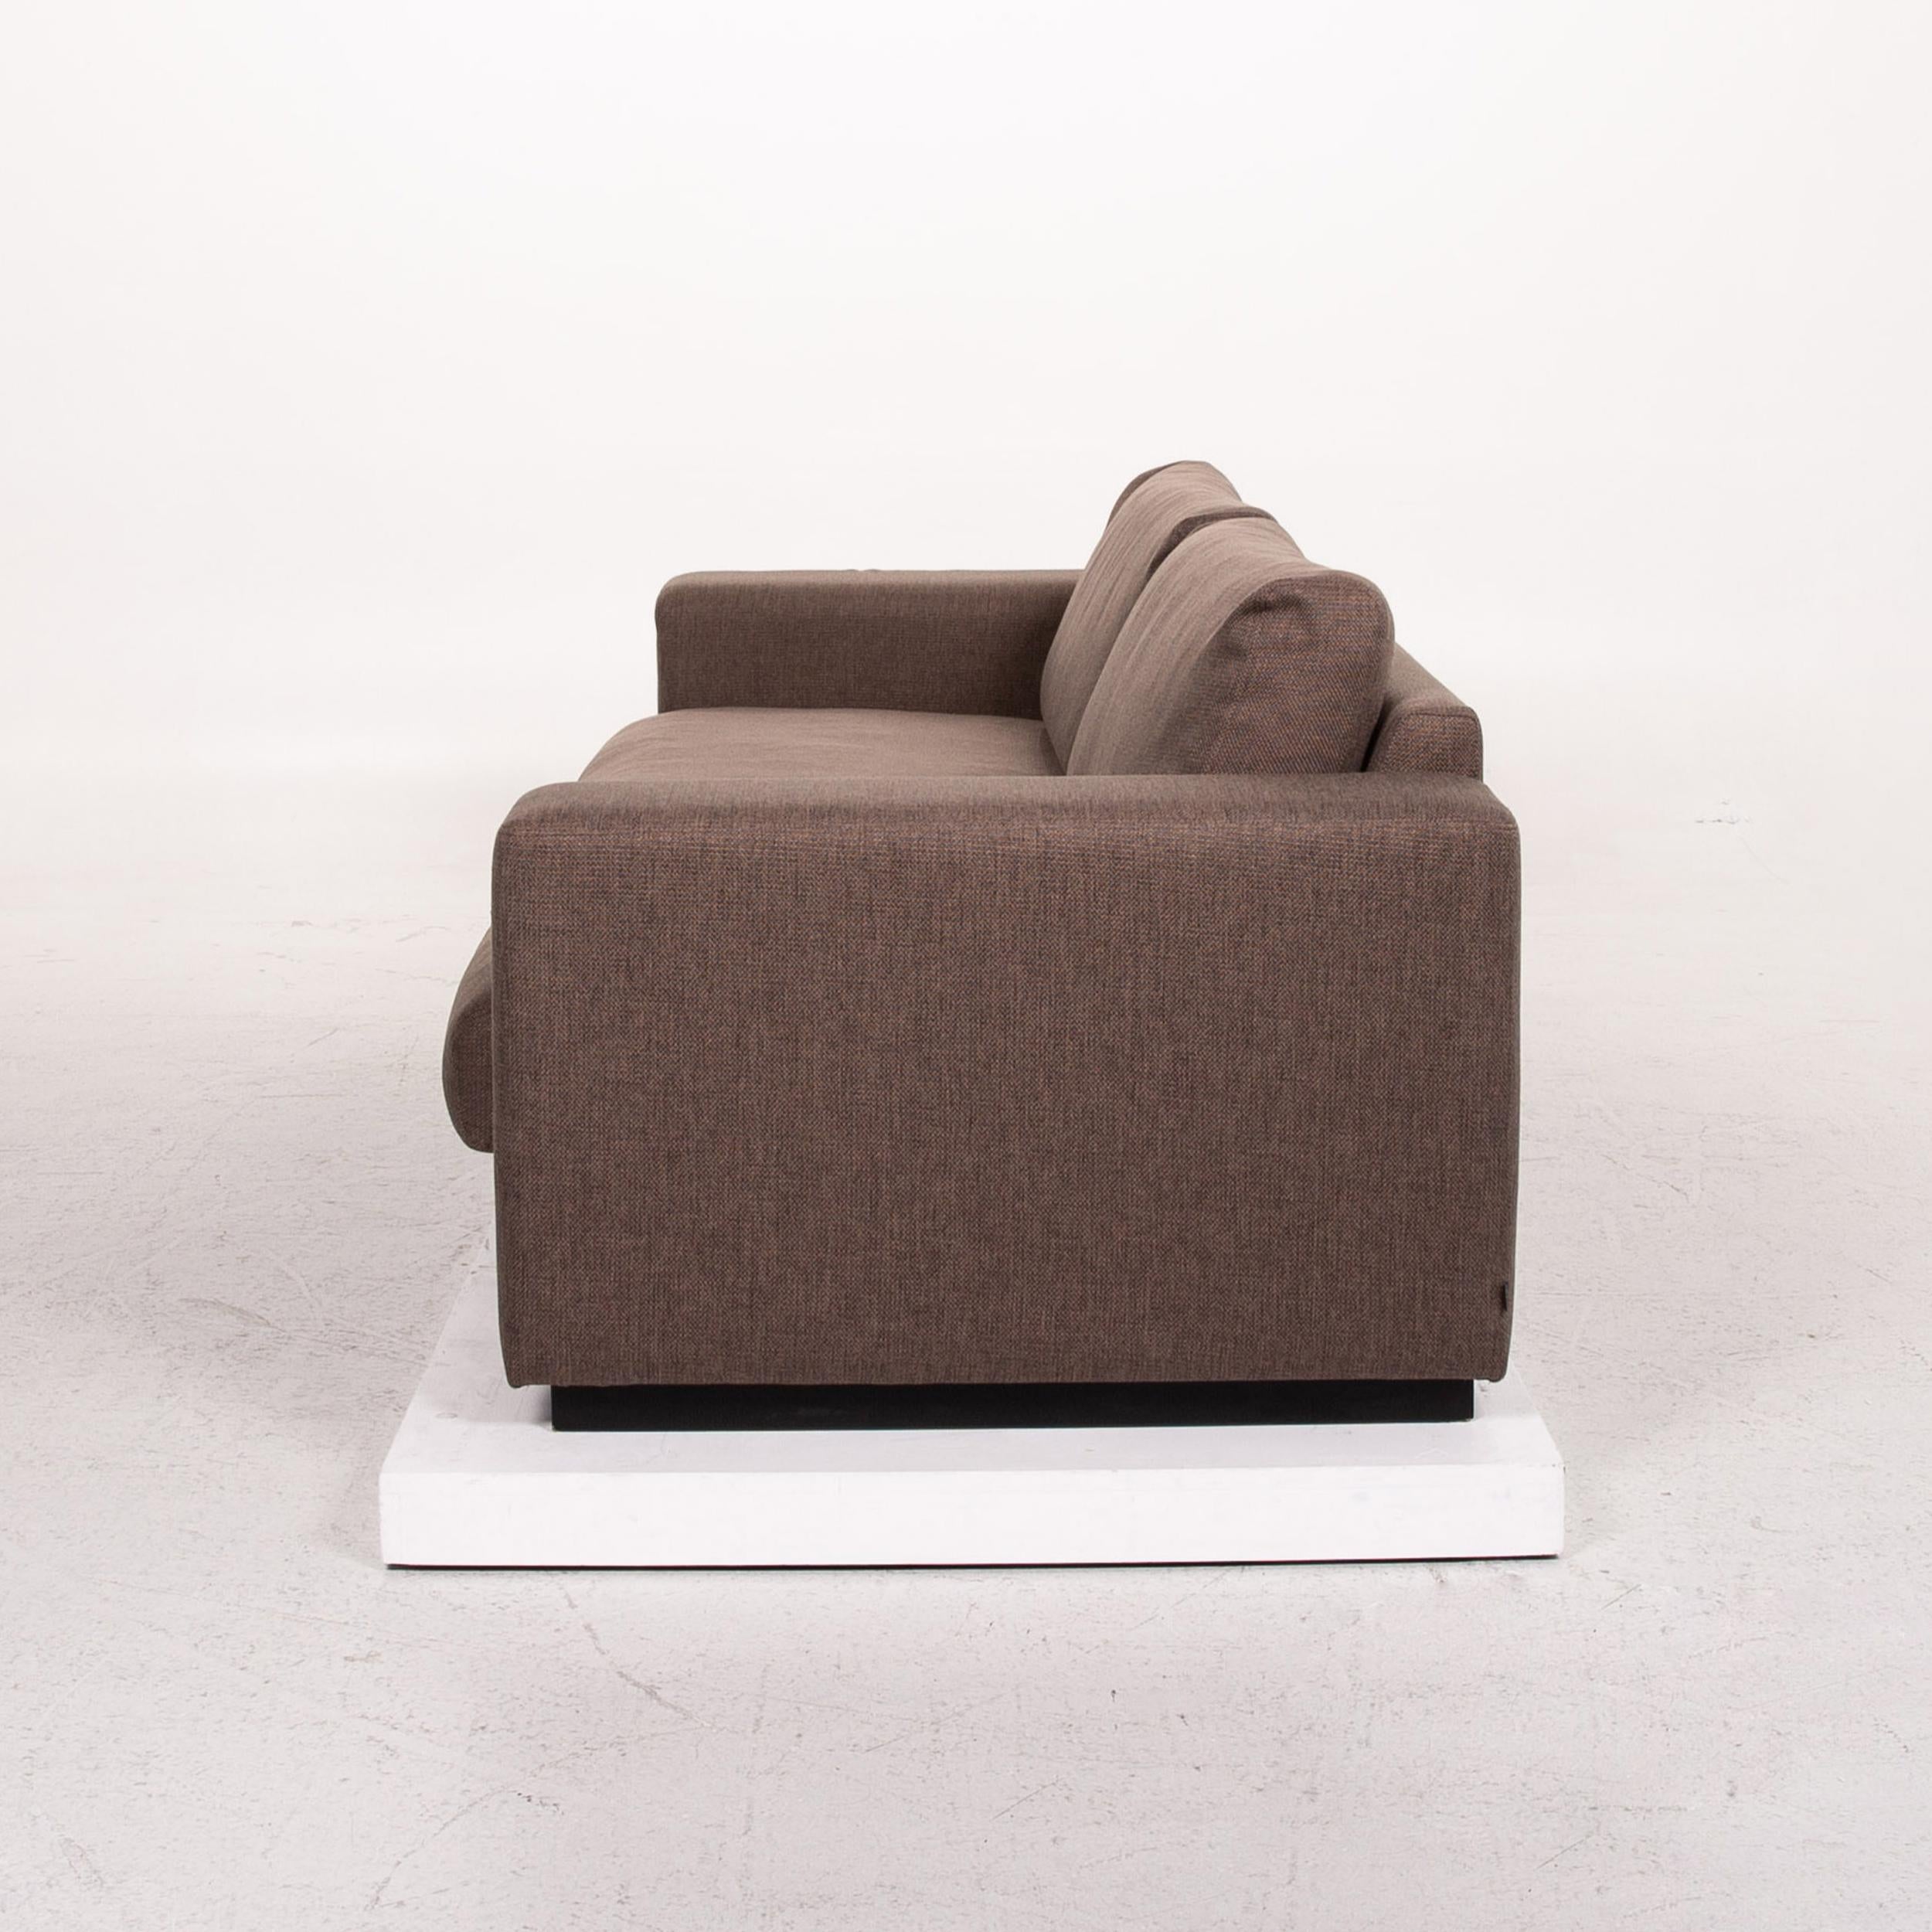 Bolia Sepia Fabric Sofa Brown Three-Seat Couch For Sale 1